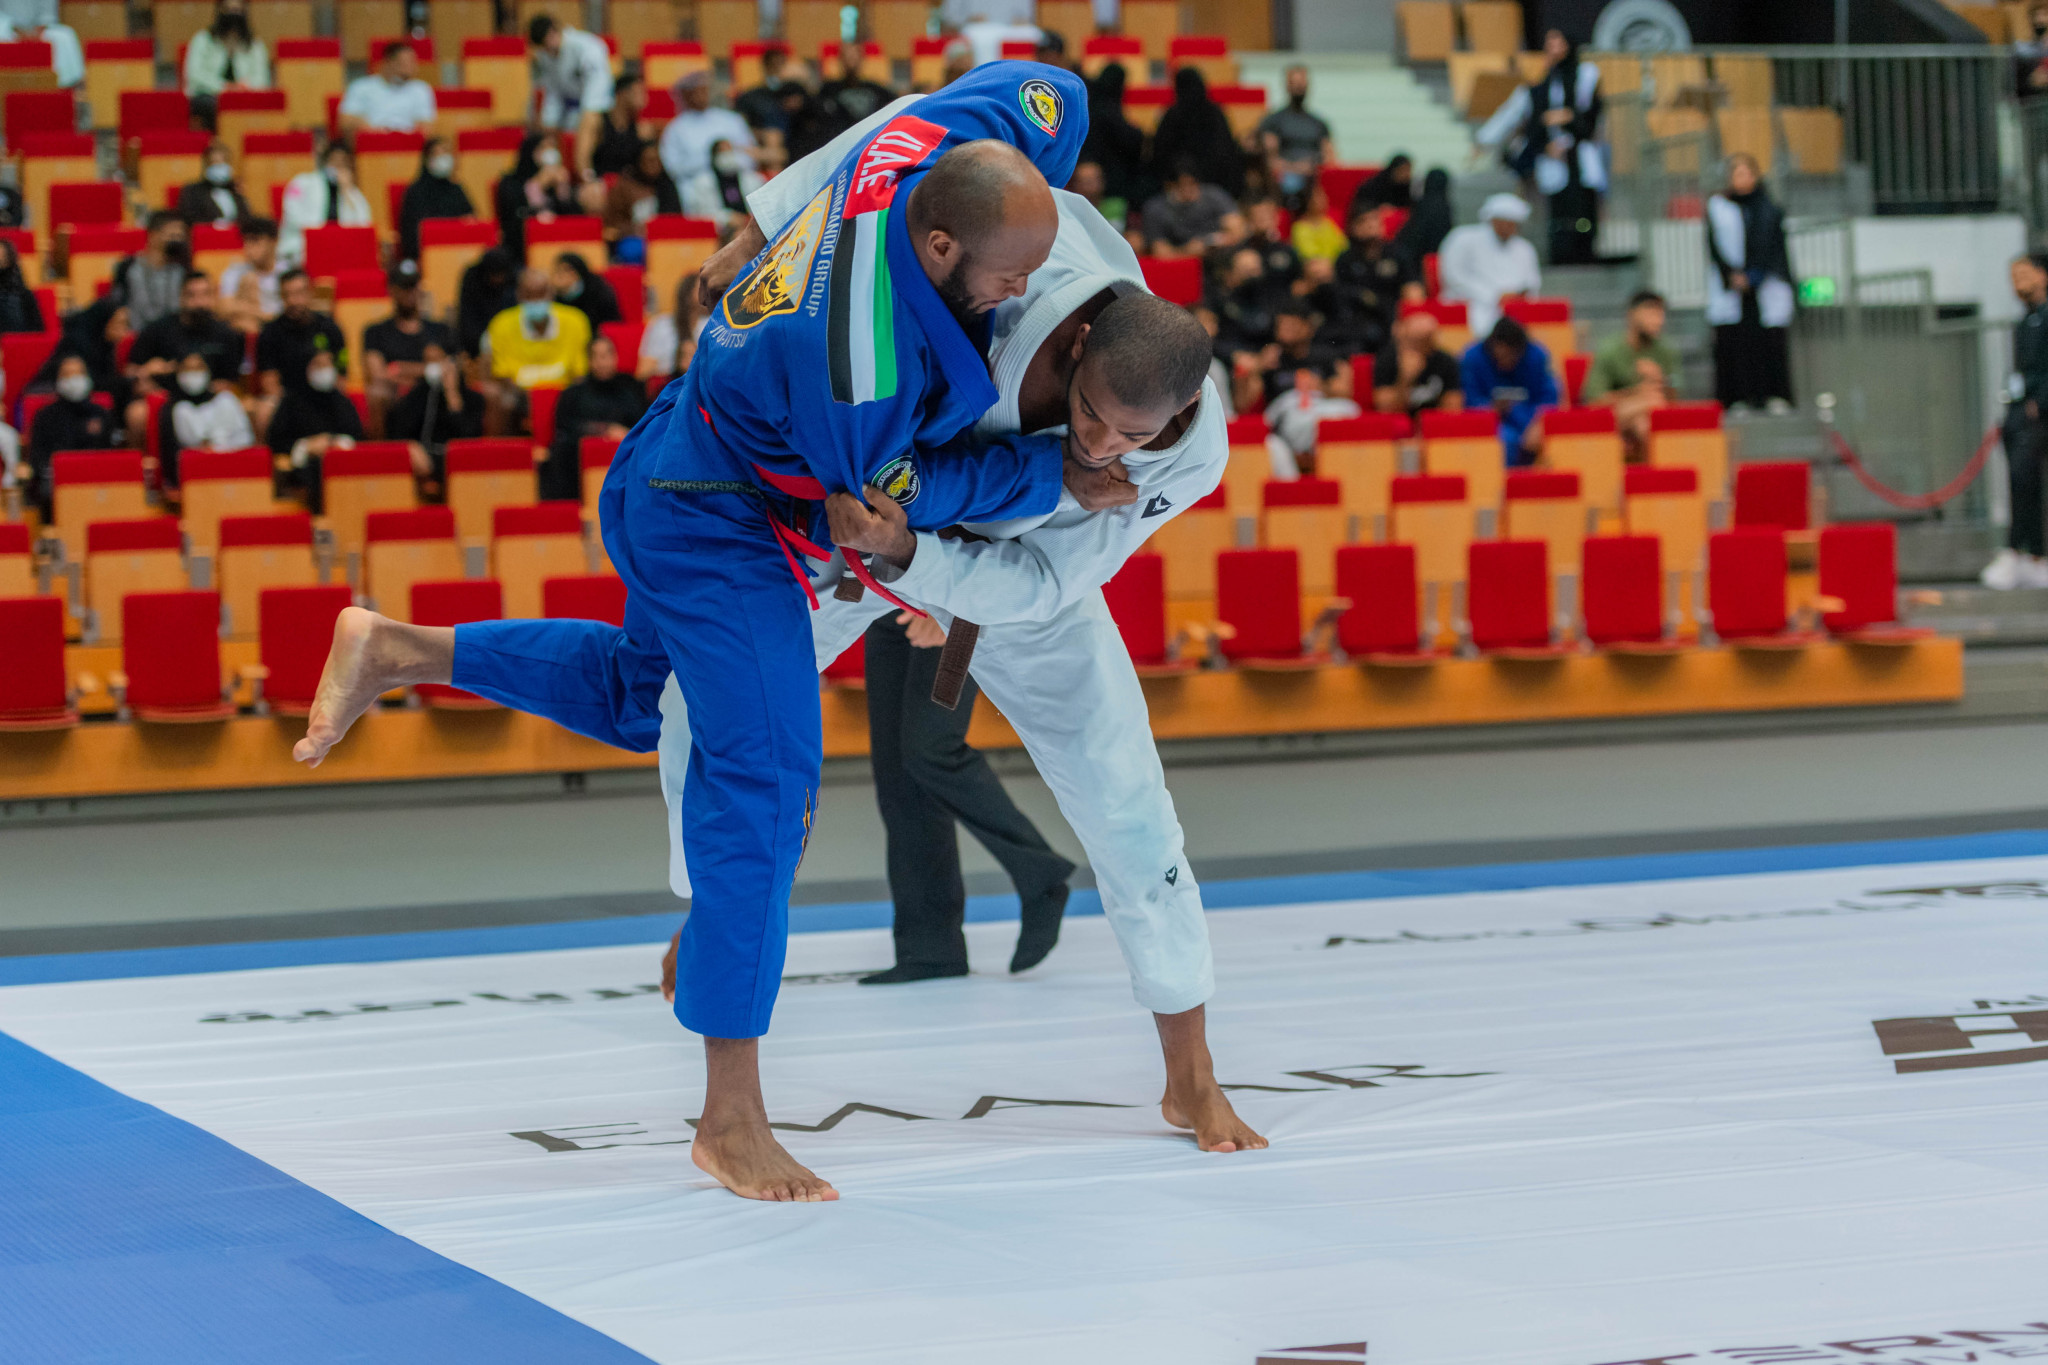 More than 60 countries to participate in AJP Tour UAE National Jiu-Jitsu Championship